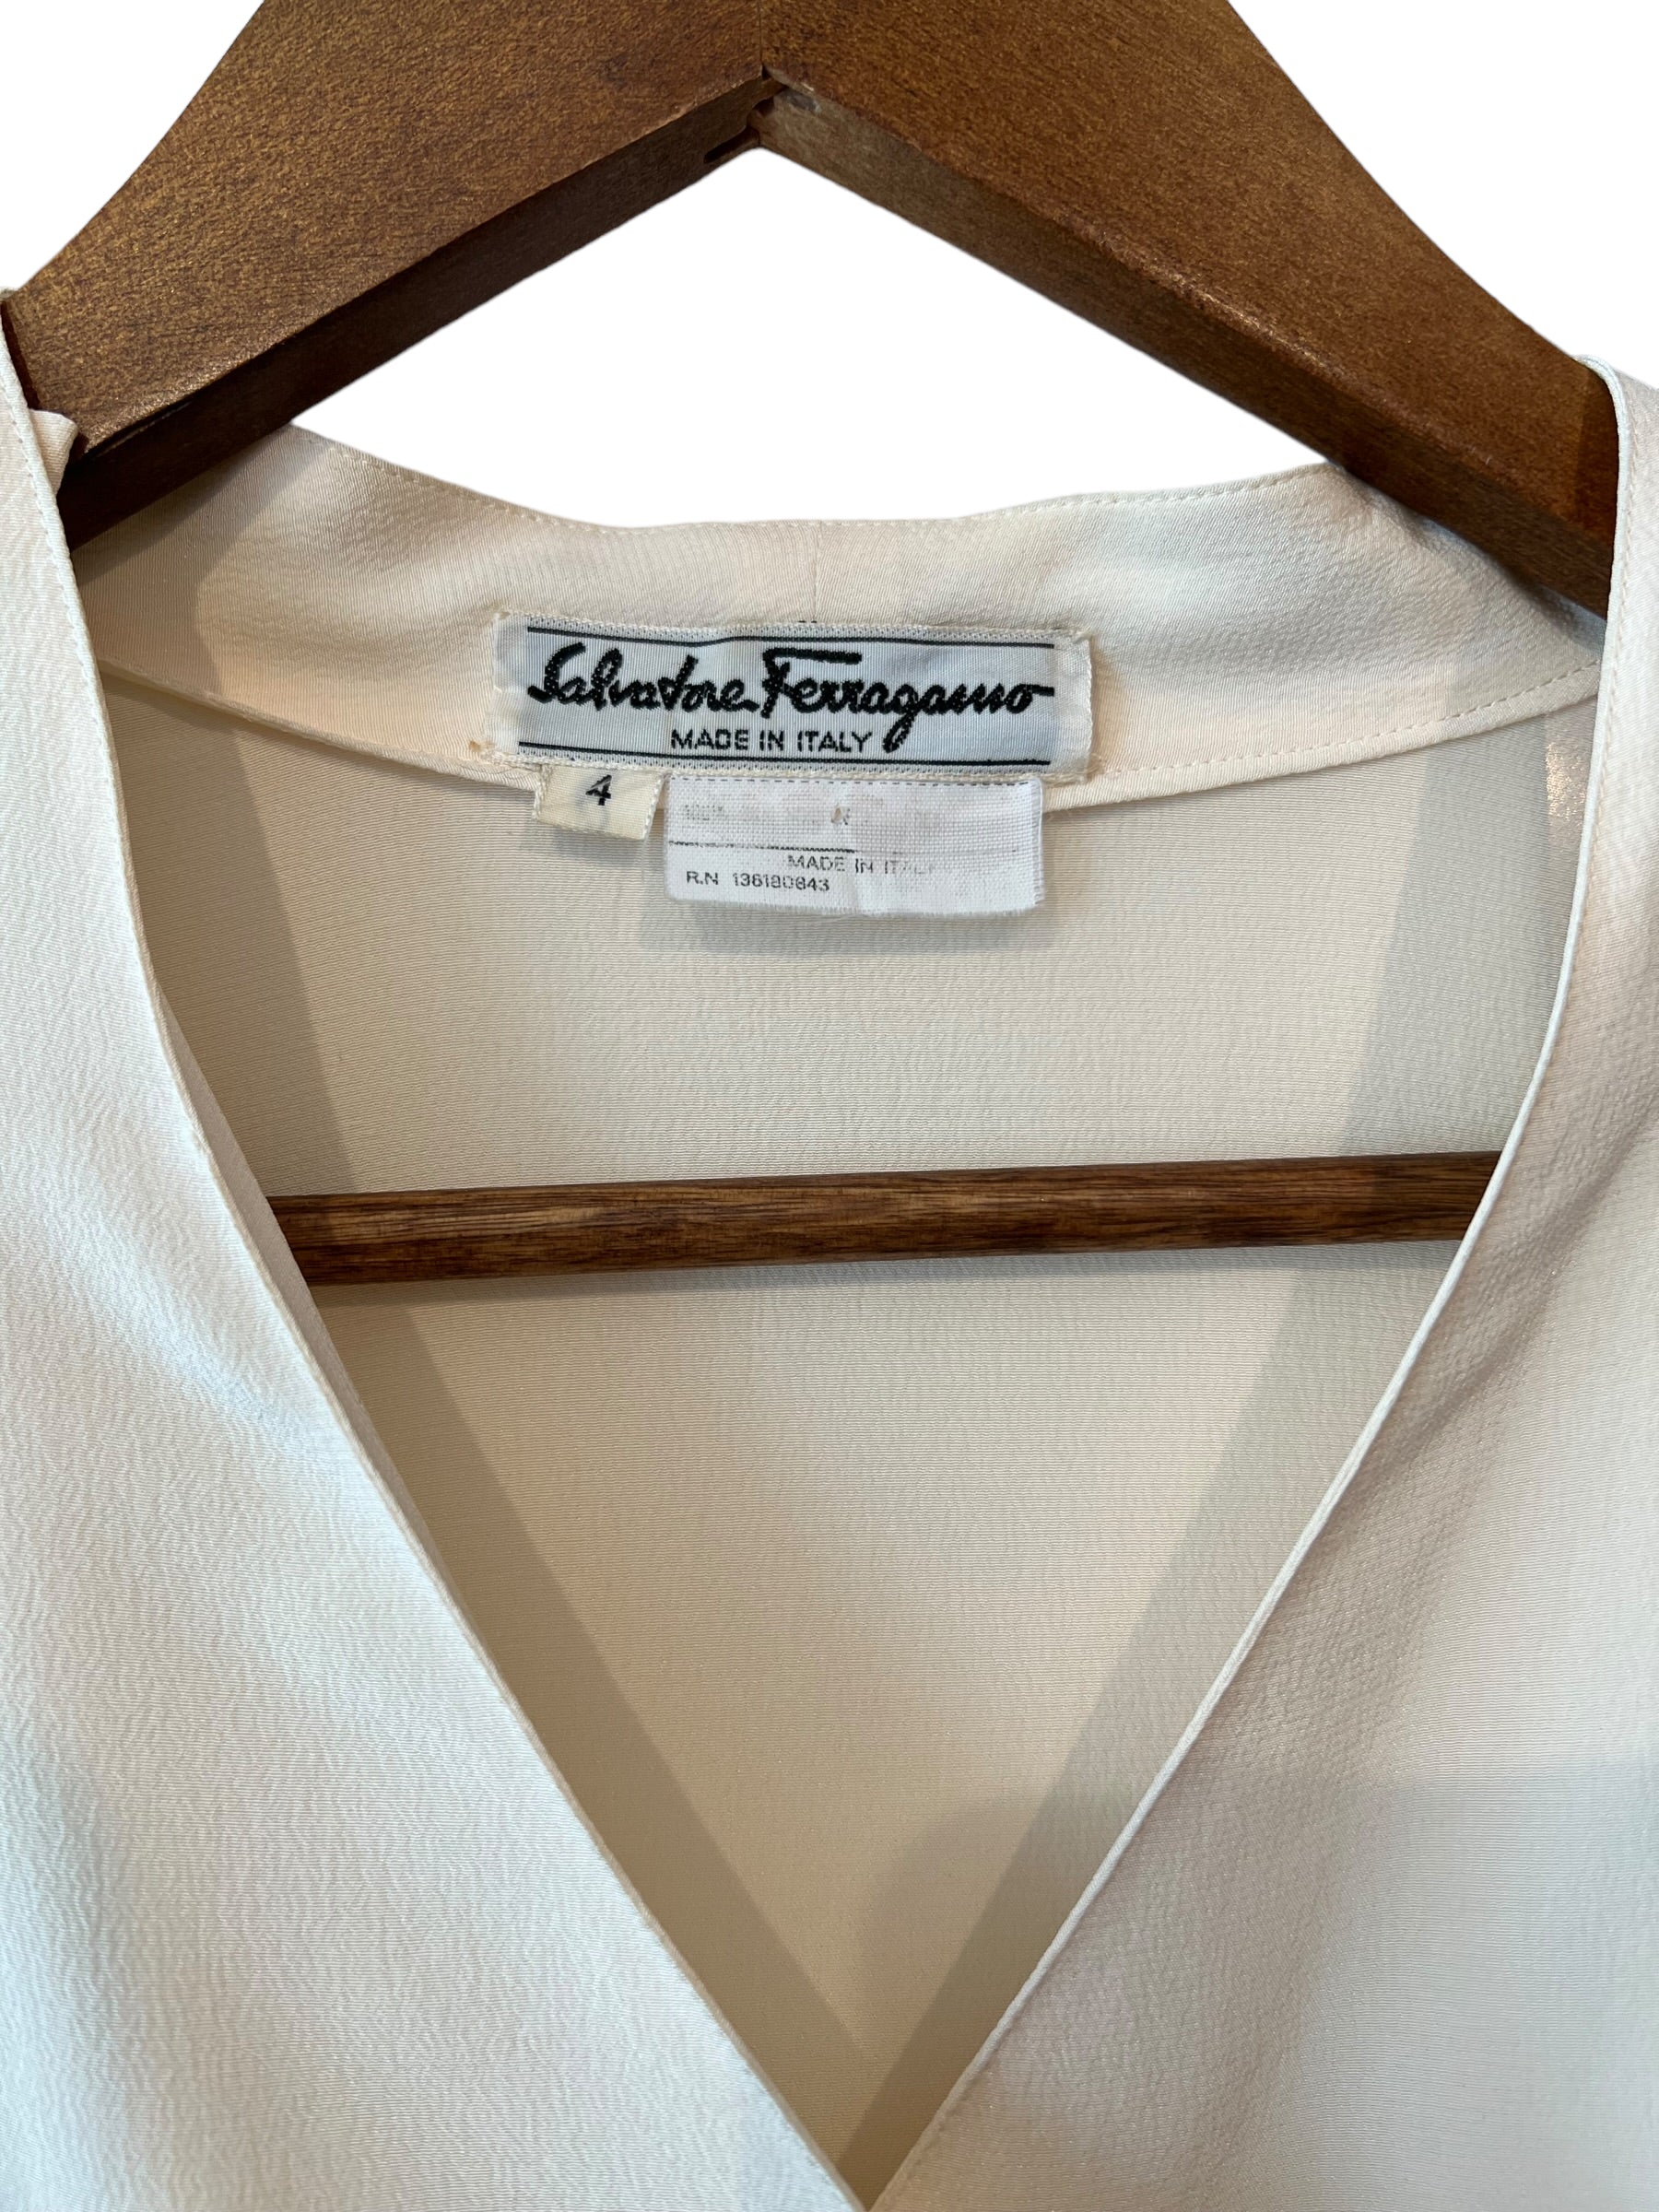 ferragamo vintage silk blouse